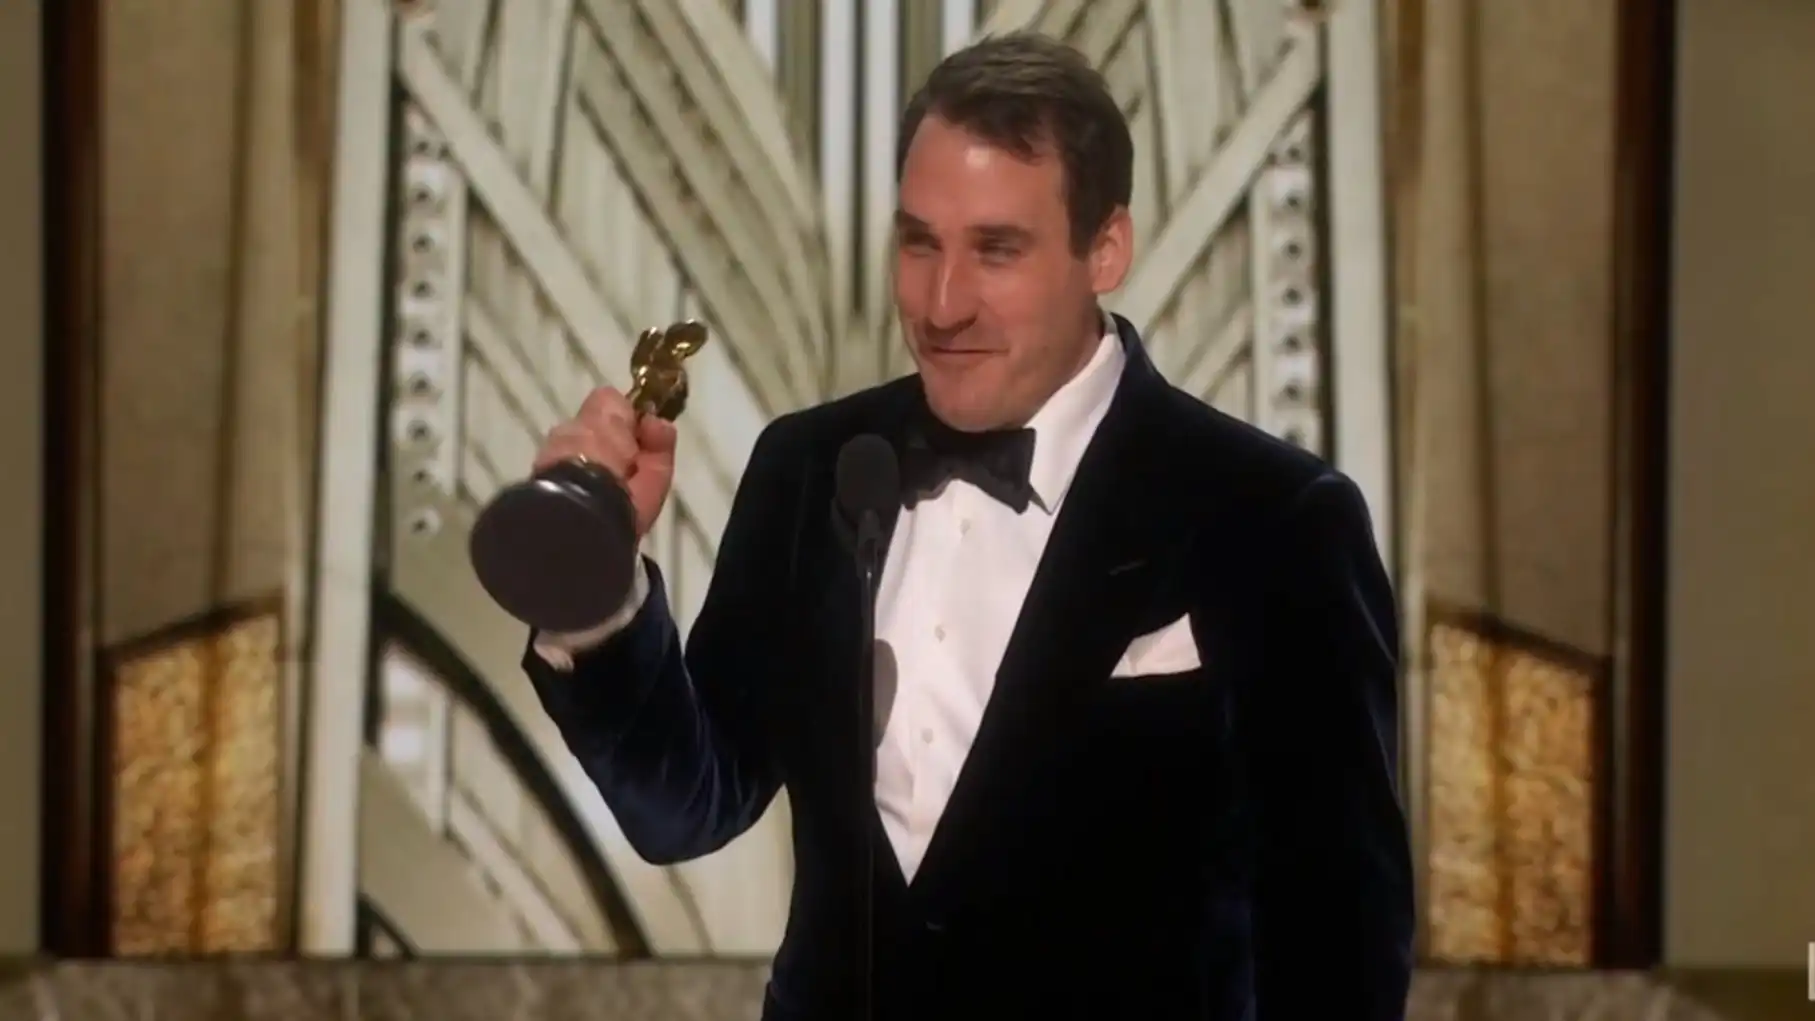 95th Oscar Winners with Award 